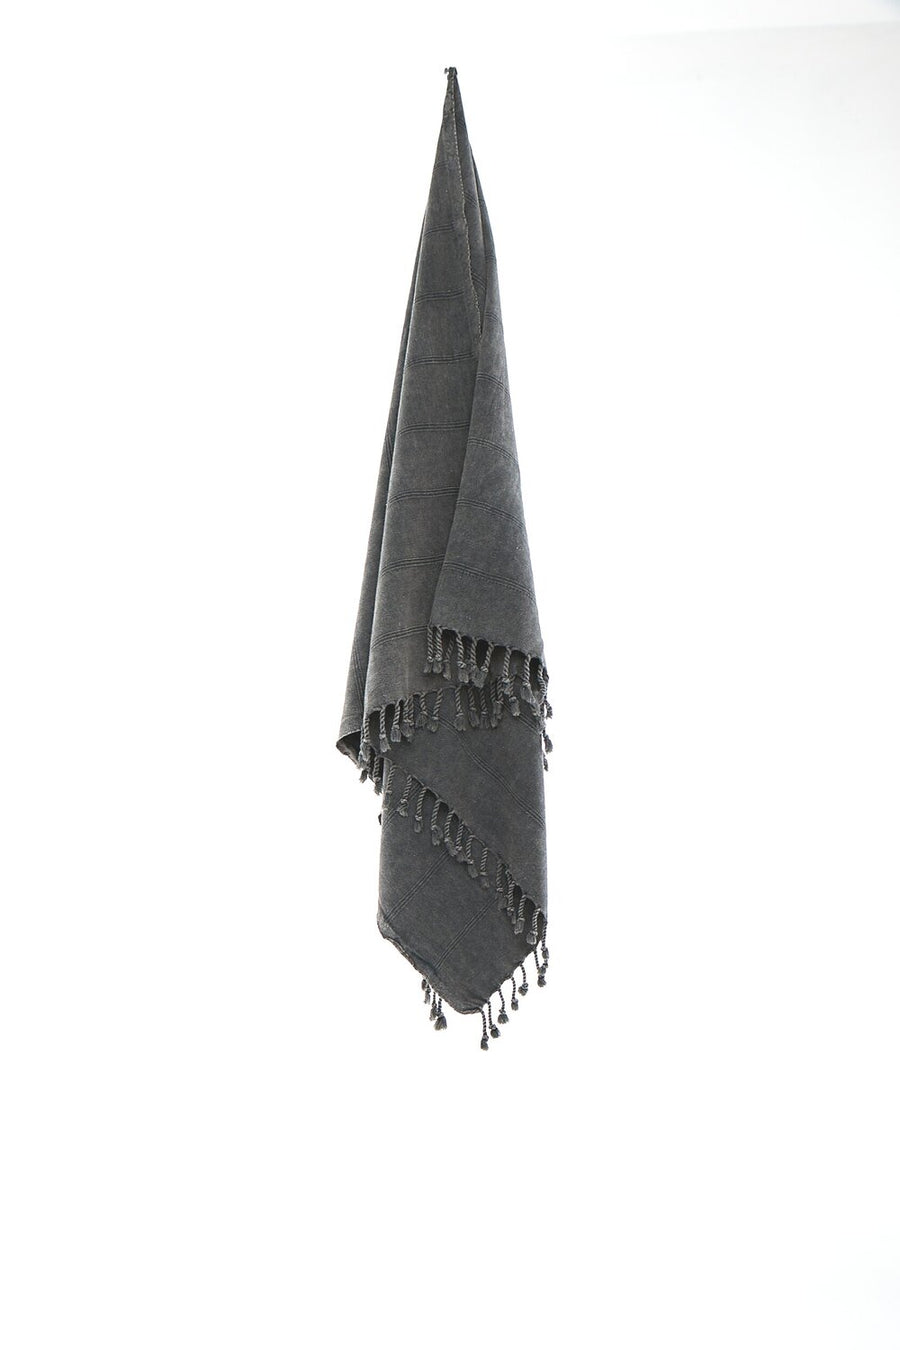 Ozoola Turkish beach towel in charcoal stonewash hanging